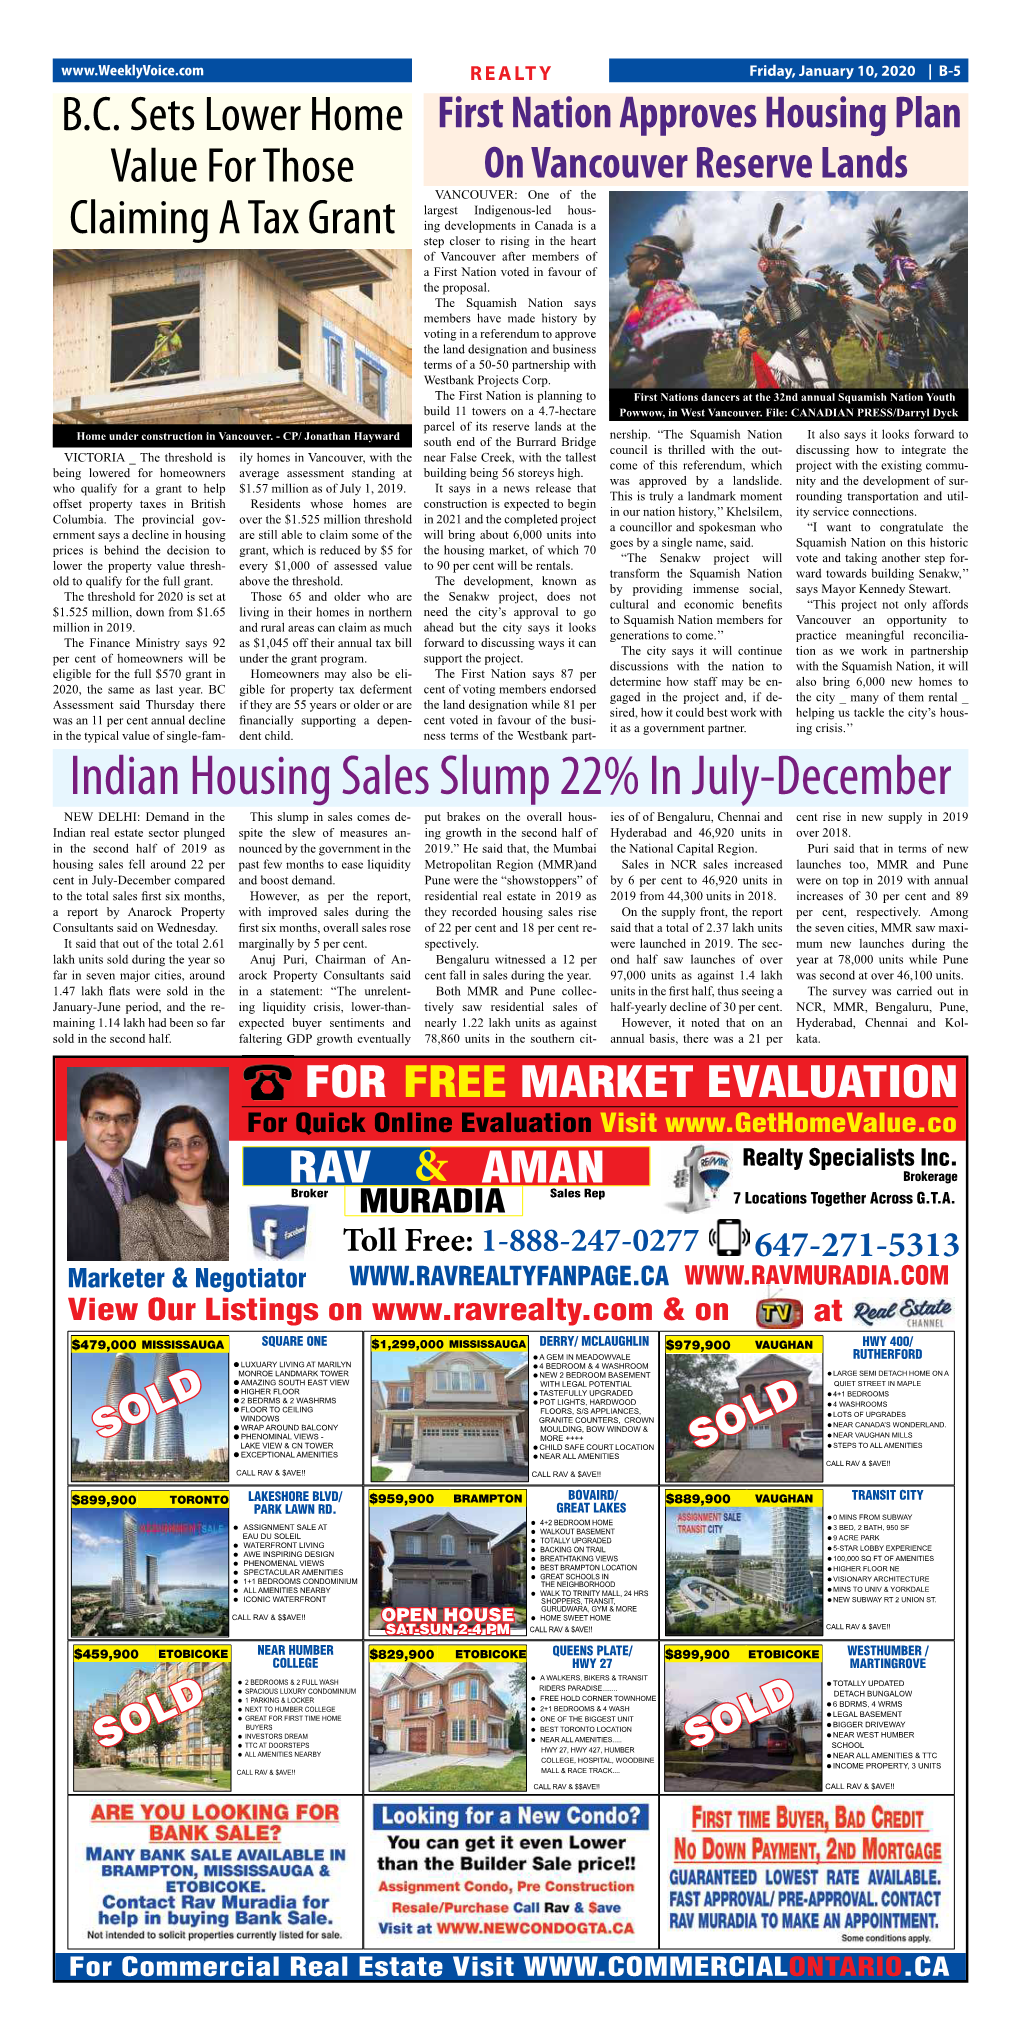 Indian Housing Sales Slump 22% in July-December